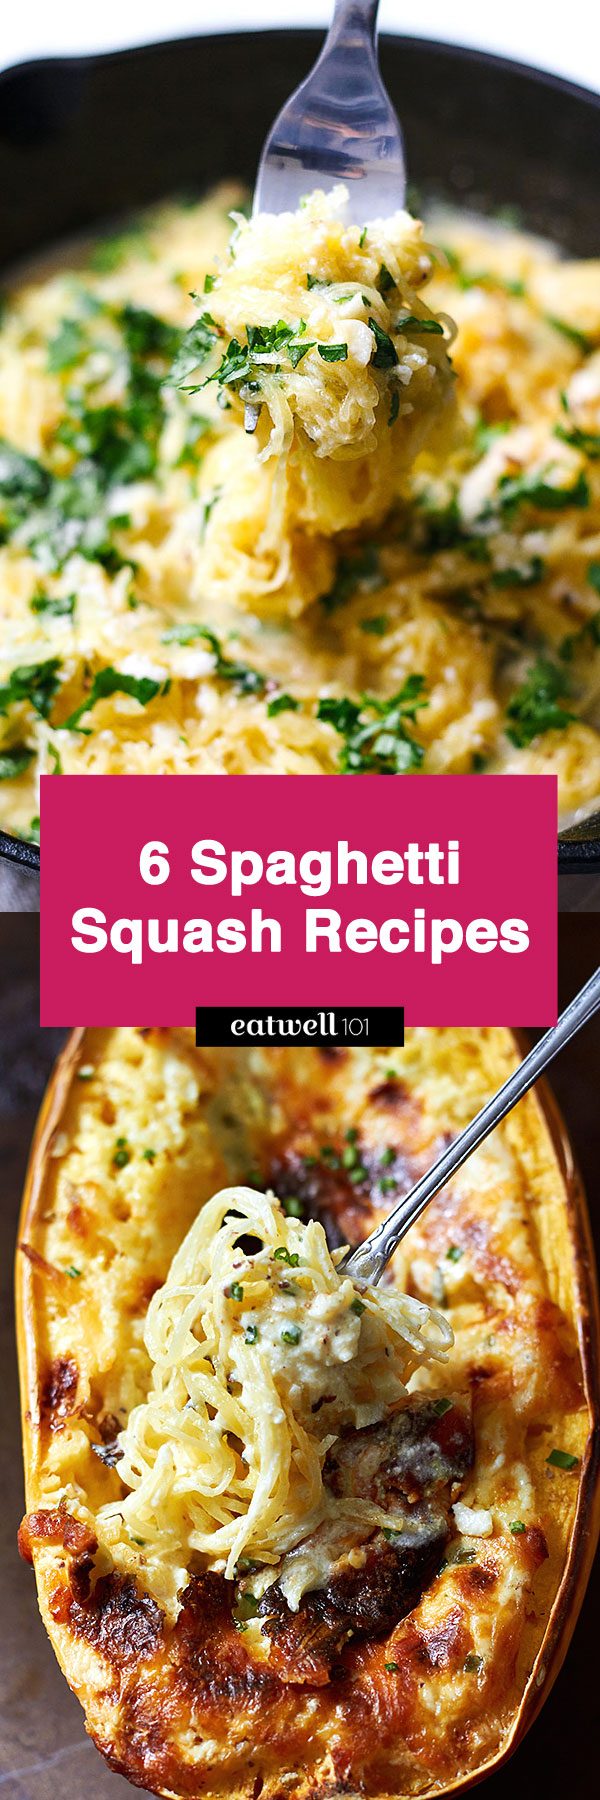 Spaghetti Squash Recipes: 6 Healthy Dinner Ideas — Eatwell101